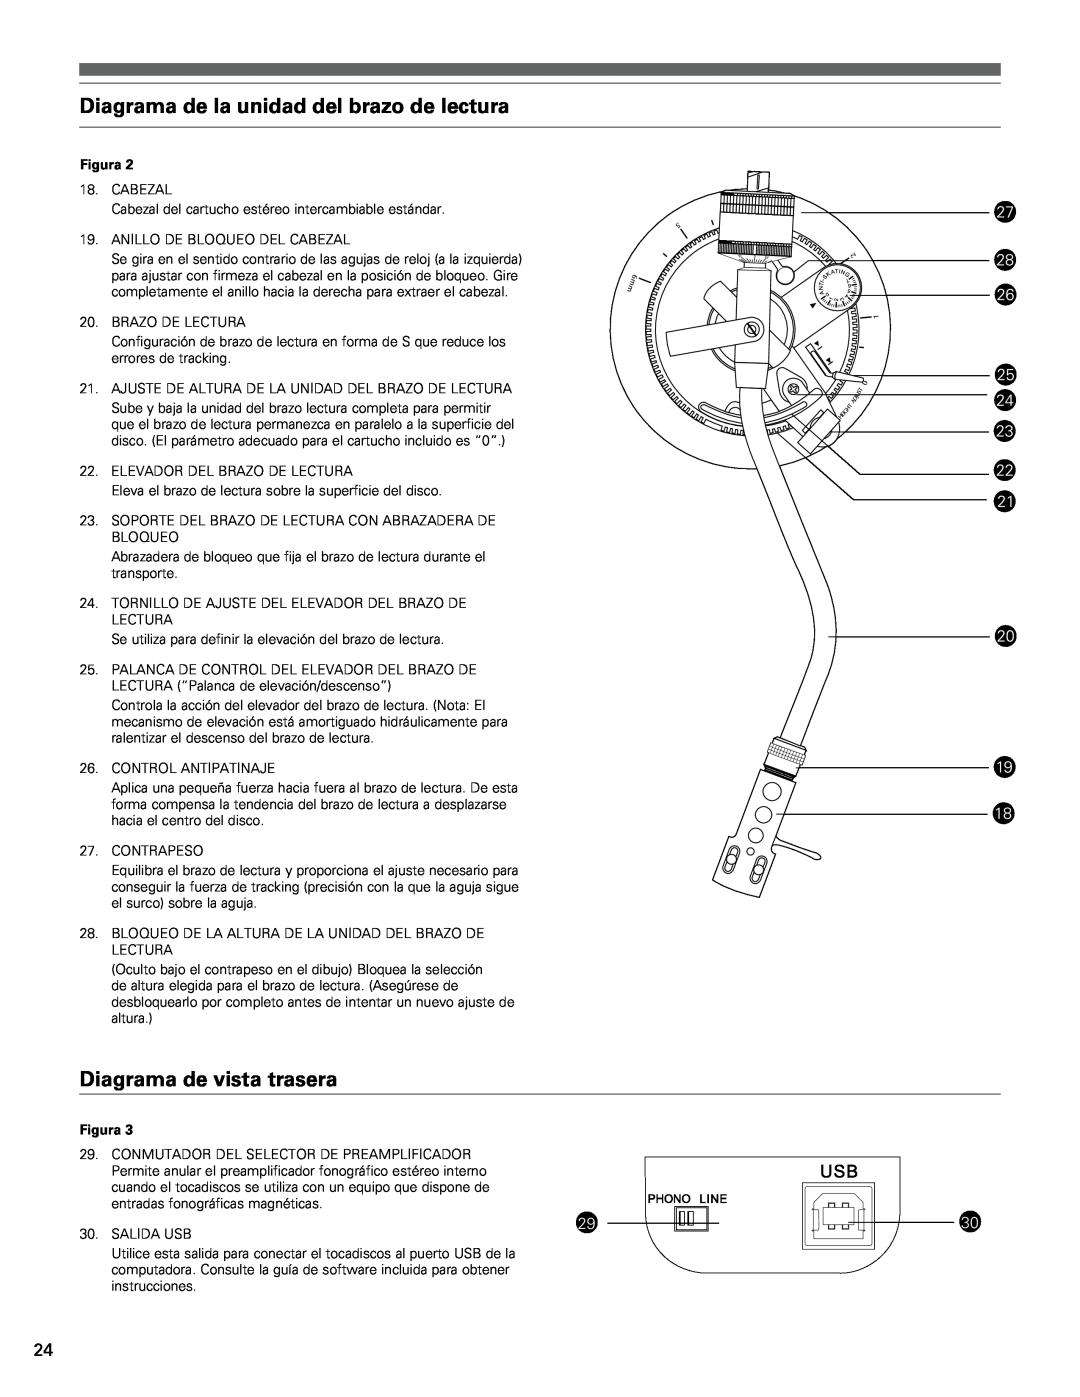 Audio-Technica AT-LP120-USB manual Diagrama de la unidad del brazo de lectura, Diagrama de vista trasera, Figura 